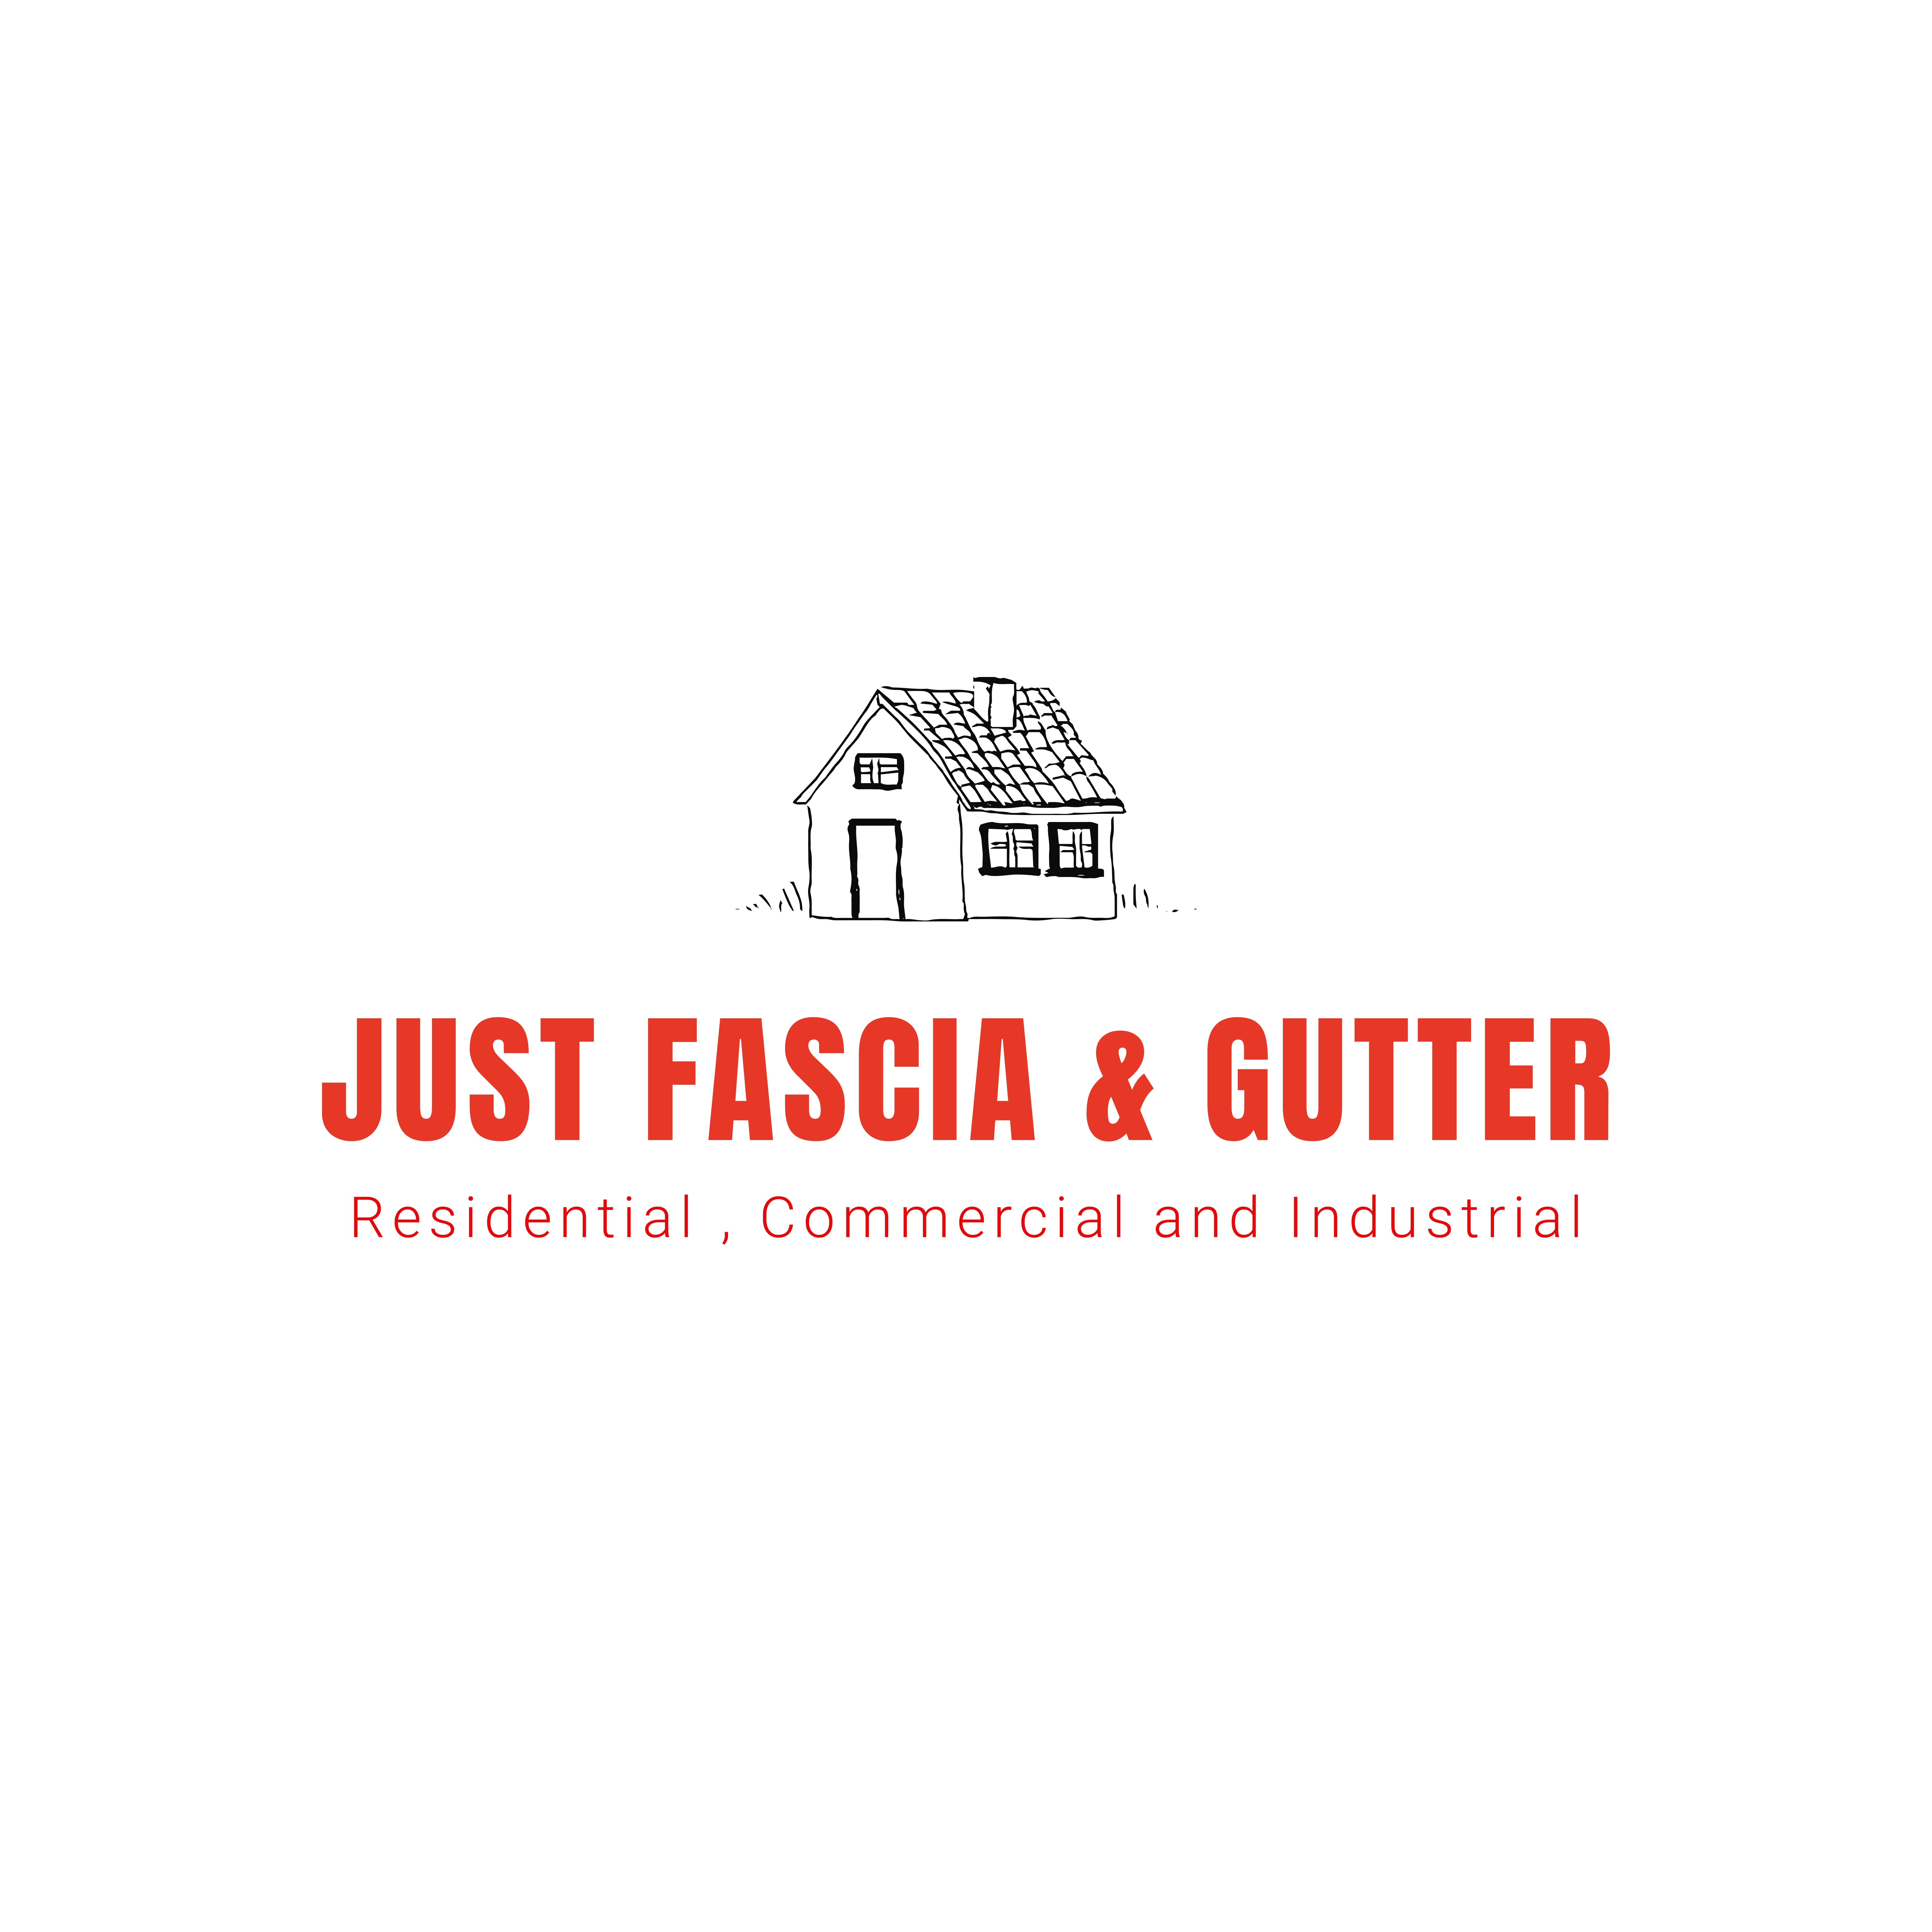 JUST FASCIA & GUTTER